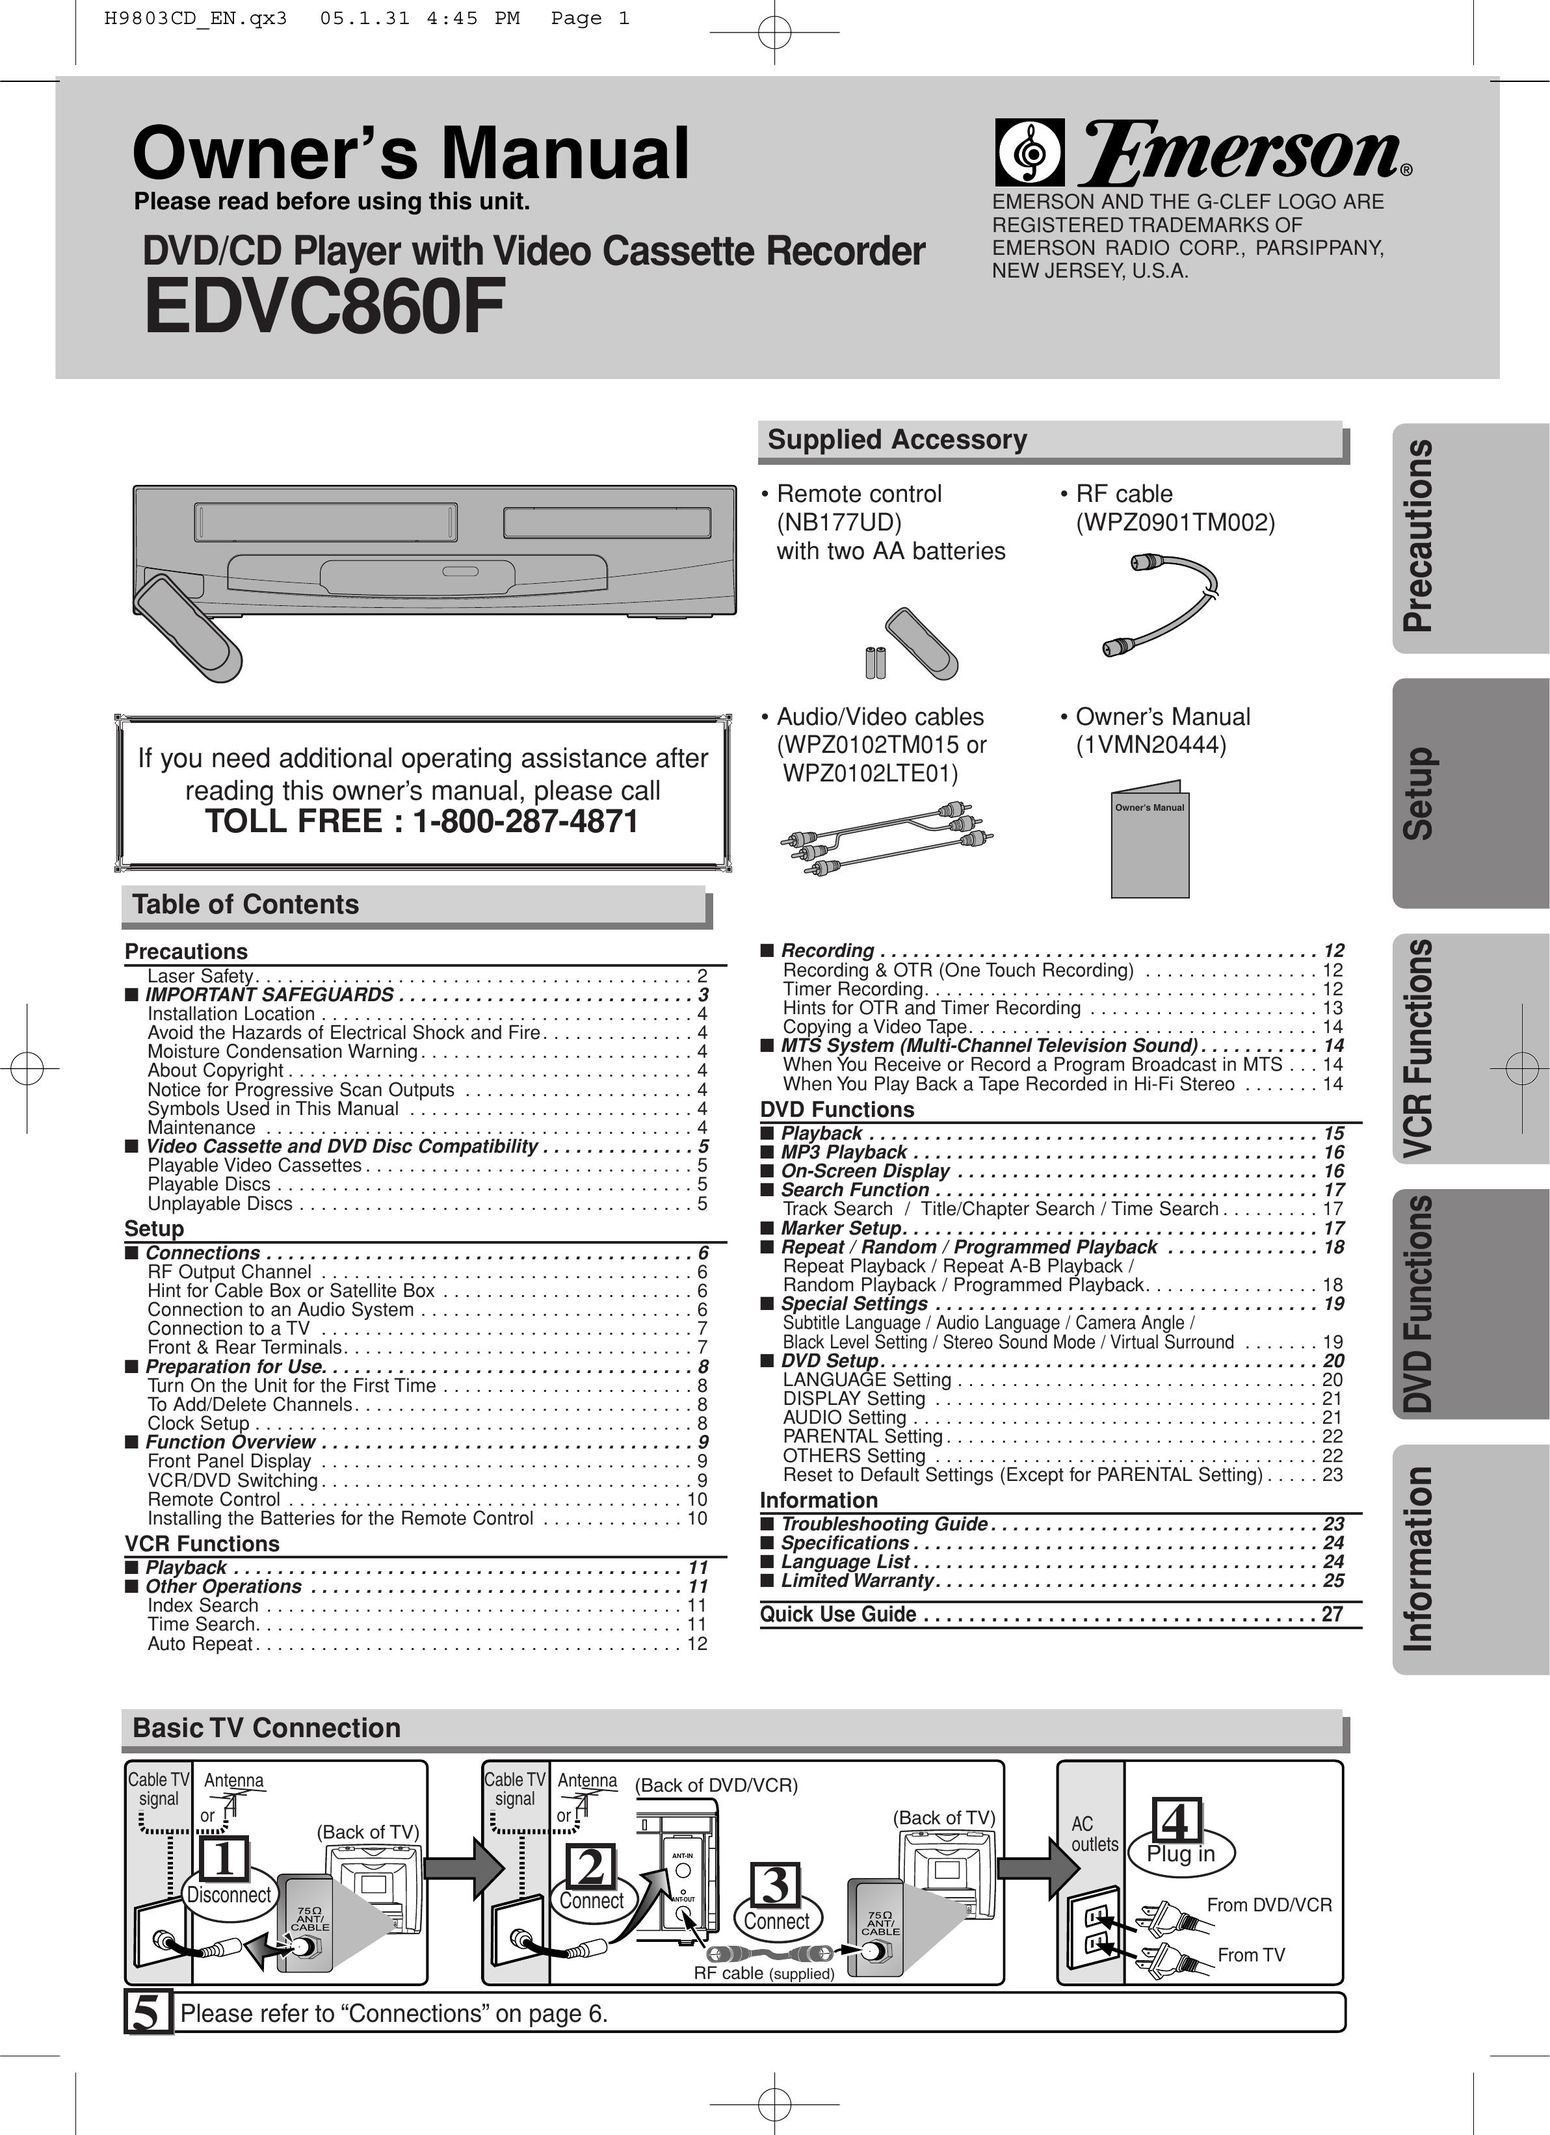 Emerson EDVC860F DVD VCR Combo User Manual